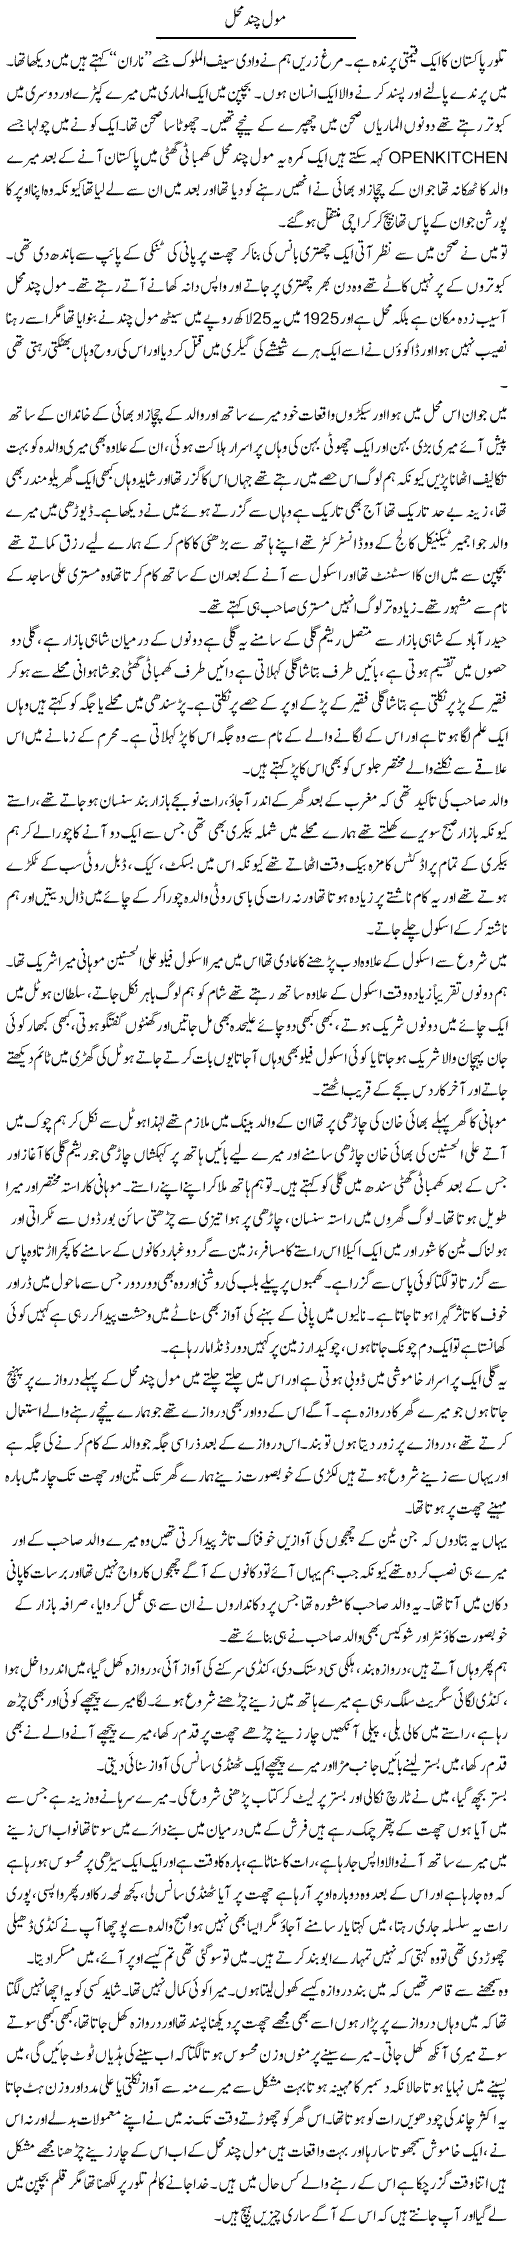 Moolchand Mahal | Syed Noor Azhar Jaffri | Daily Urdu Columns